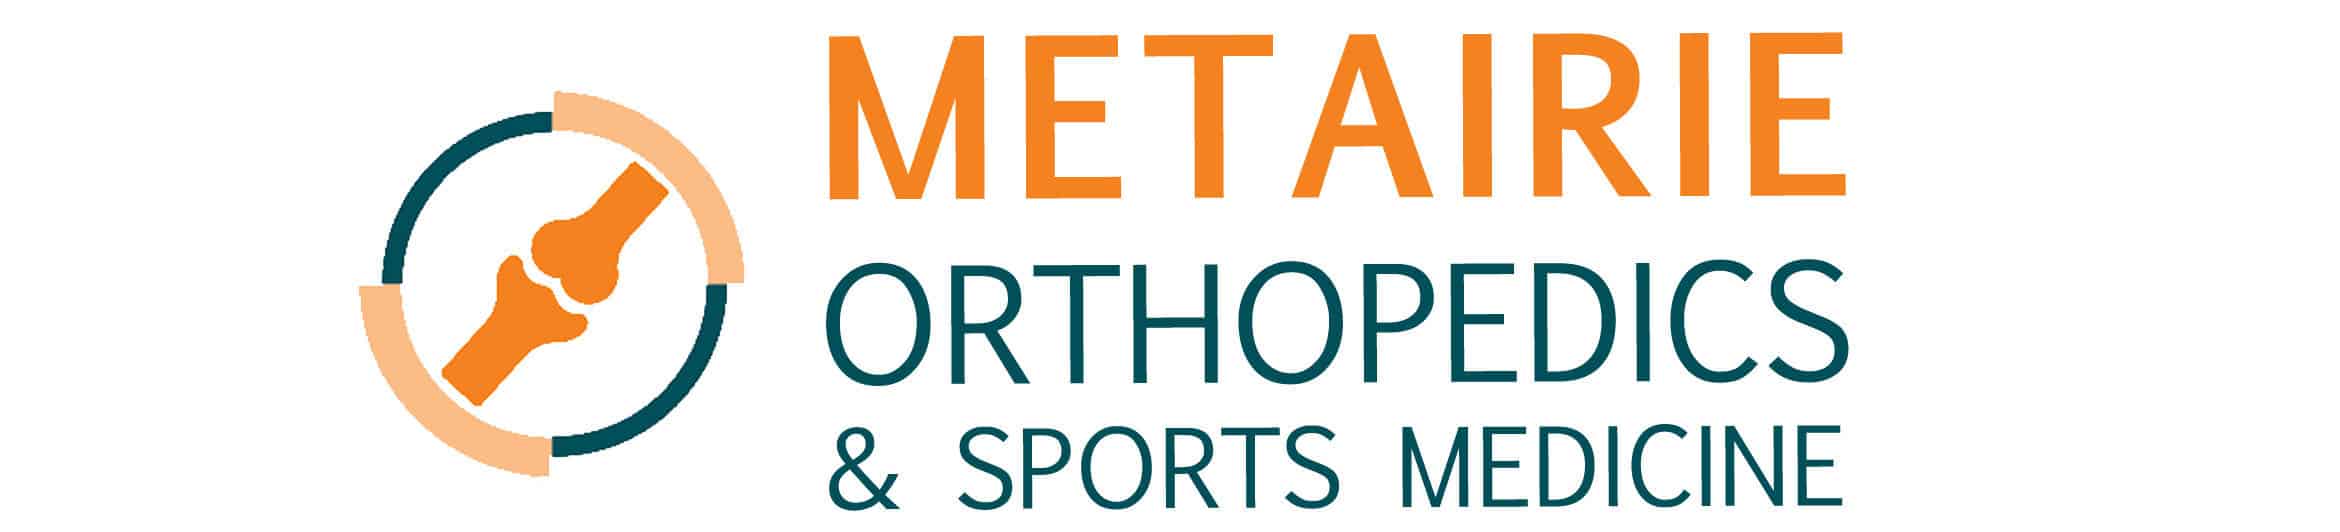 Metairie Orthopedics & Sports Medicine